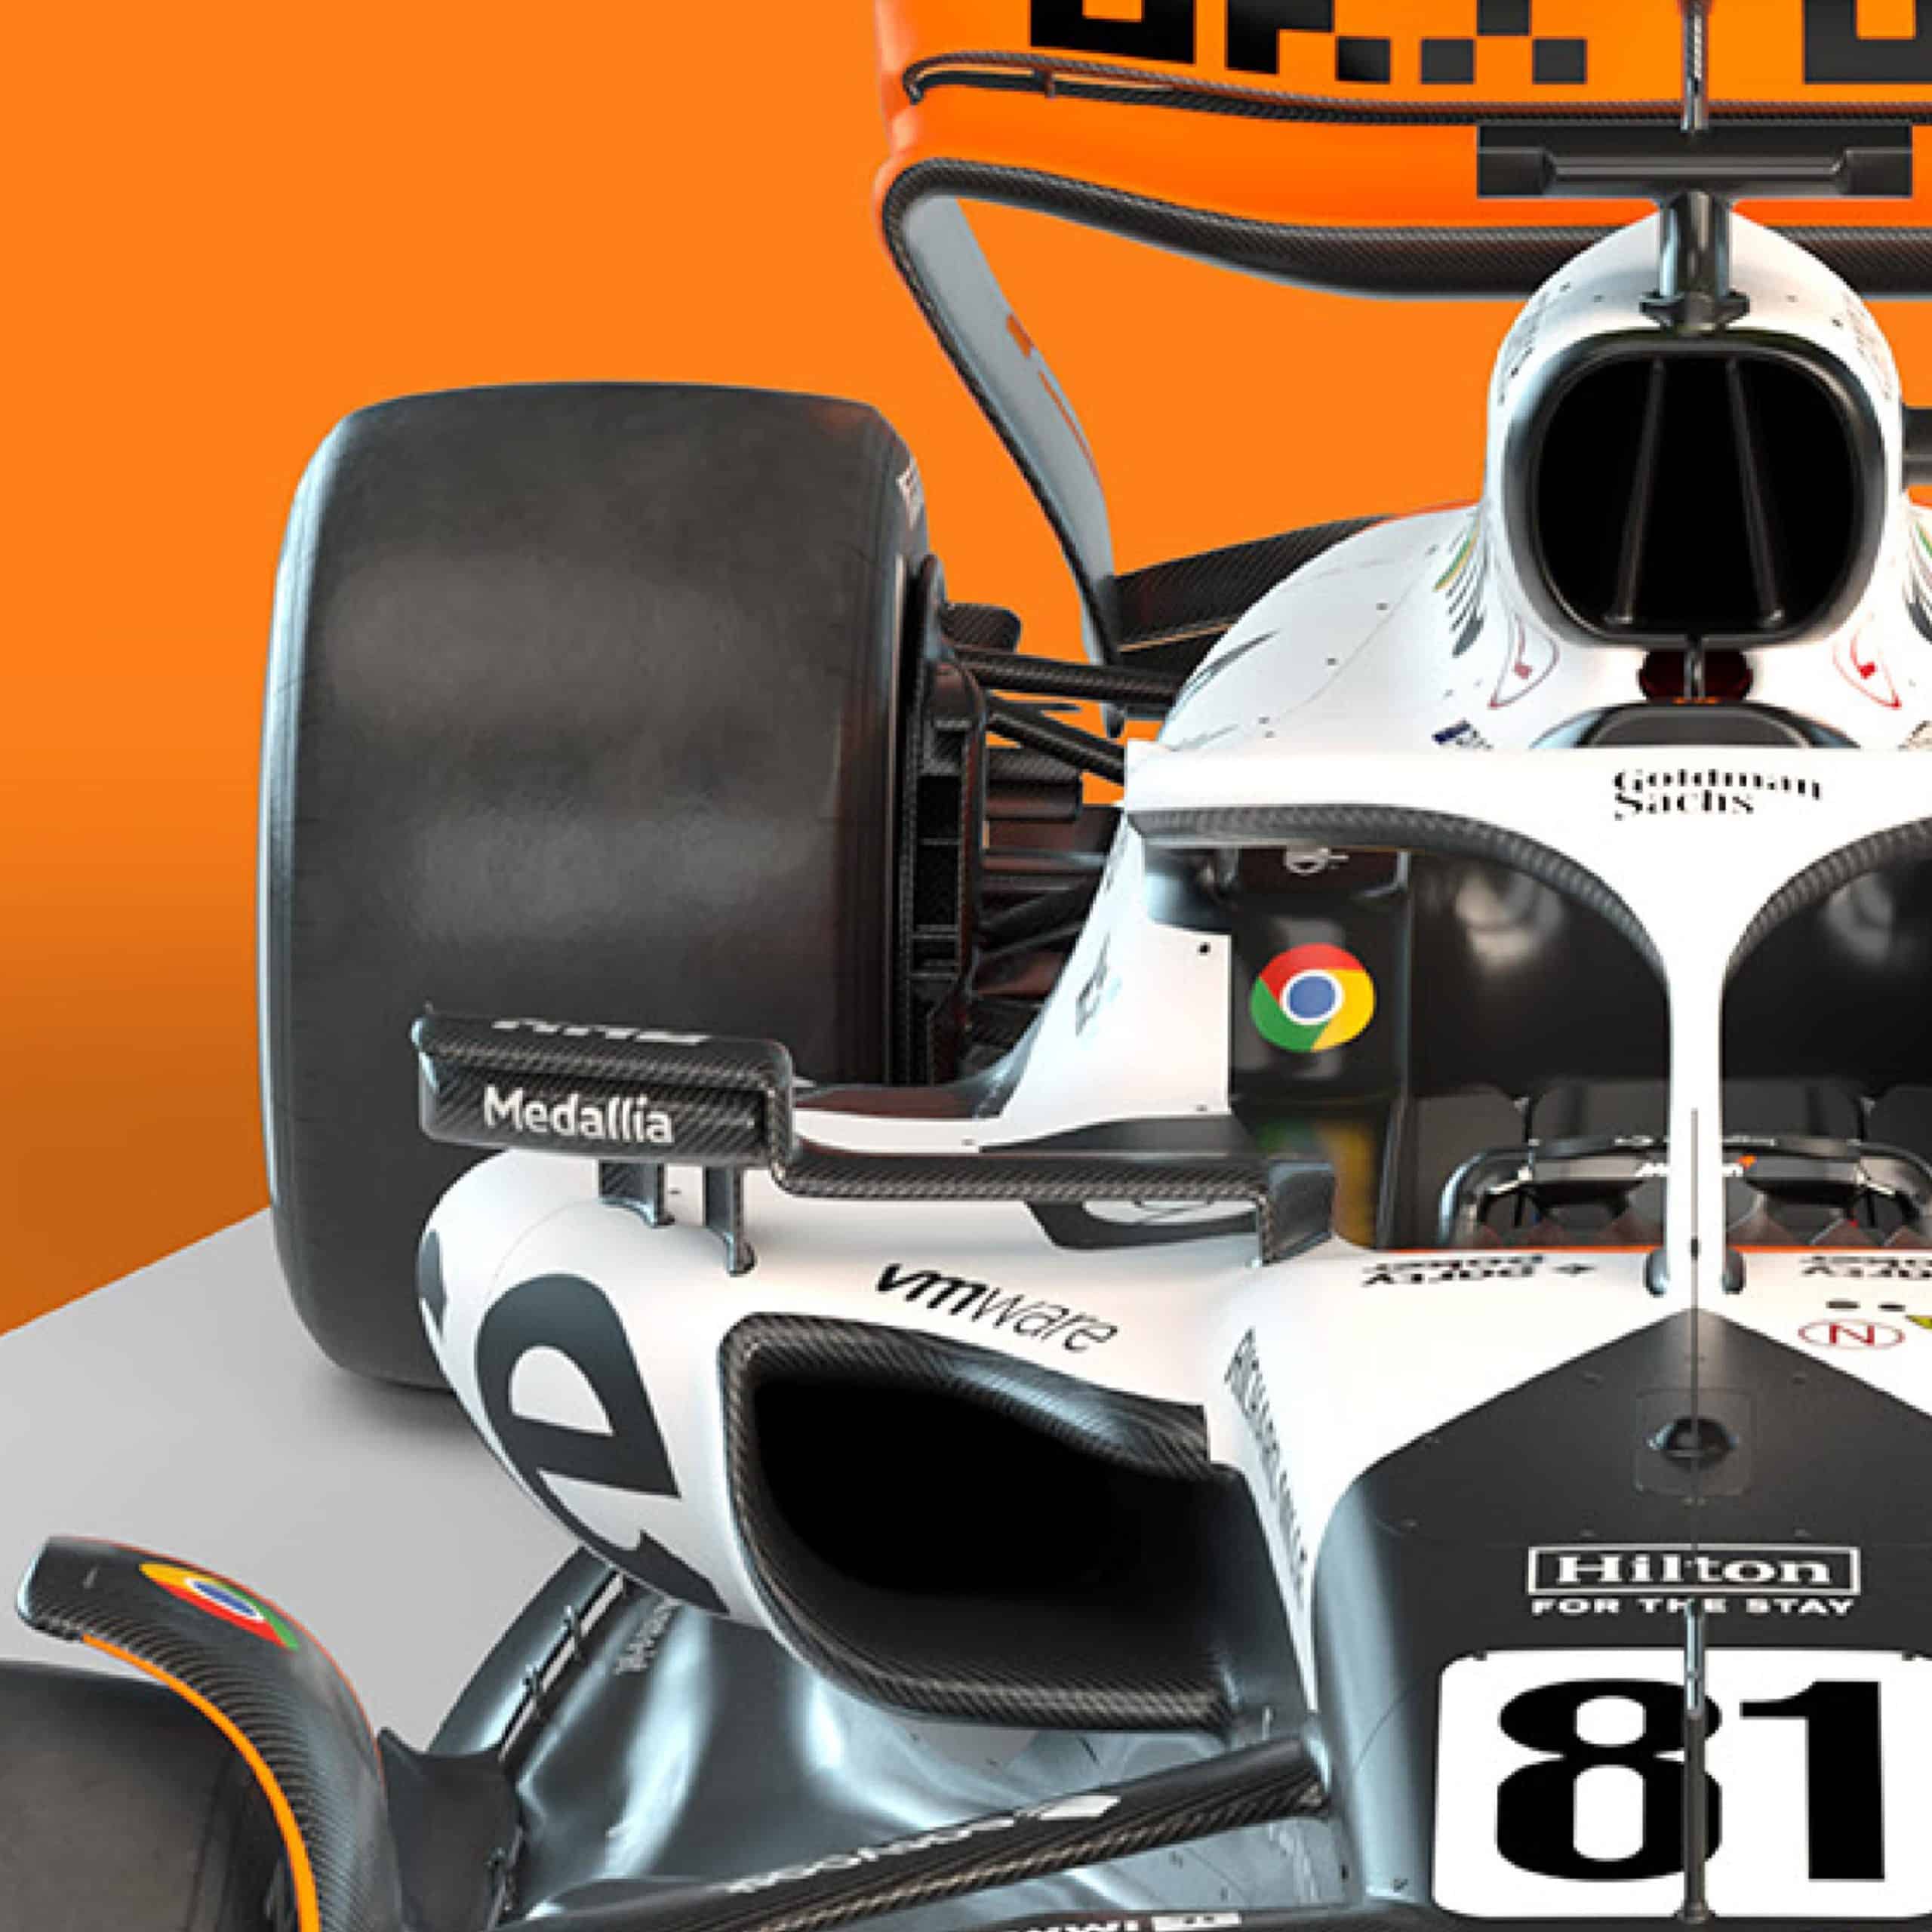 McLaren Racing - MCL60 - 60th Anniversary - 2023